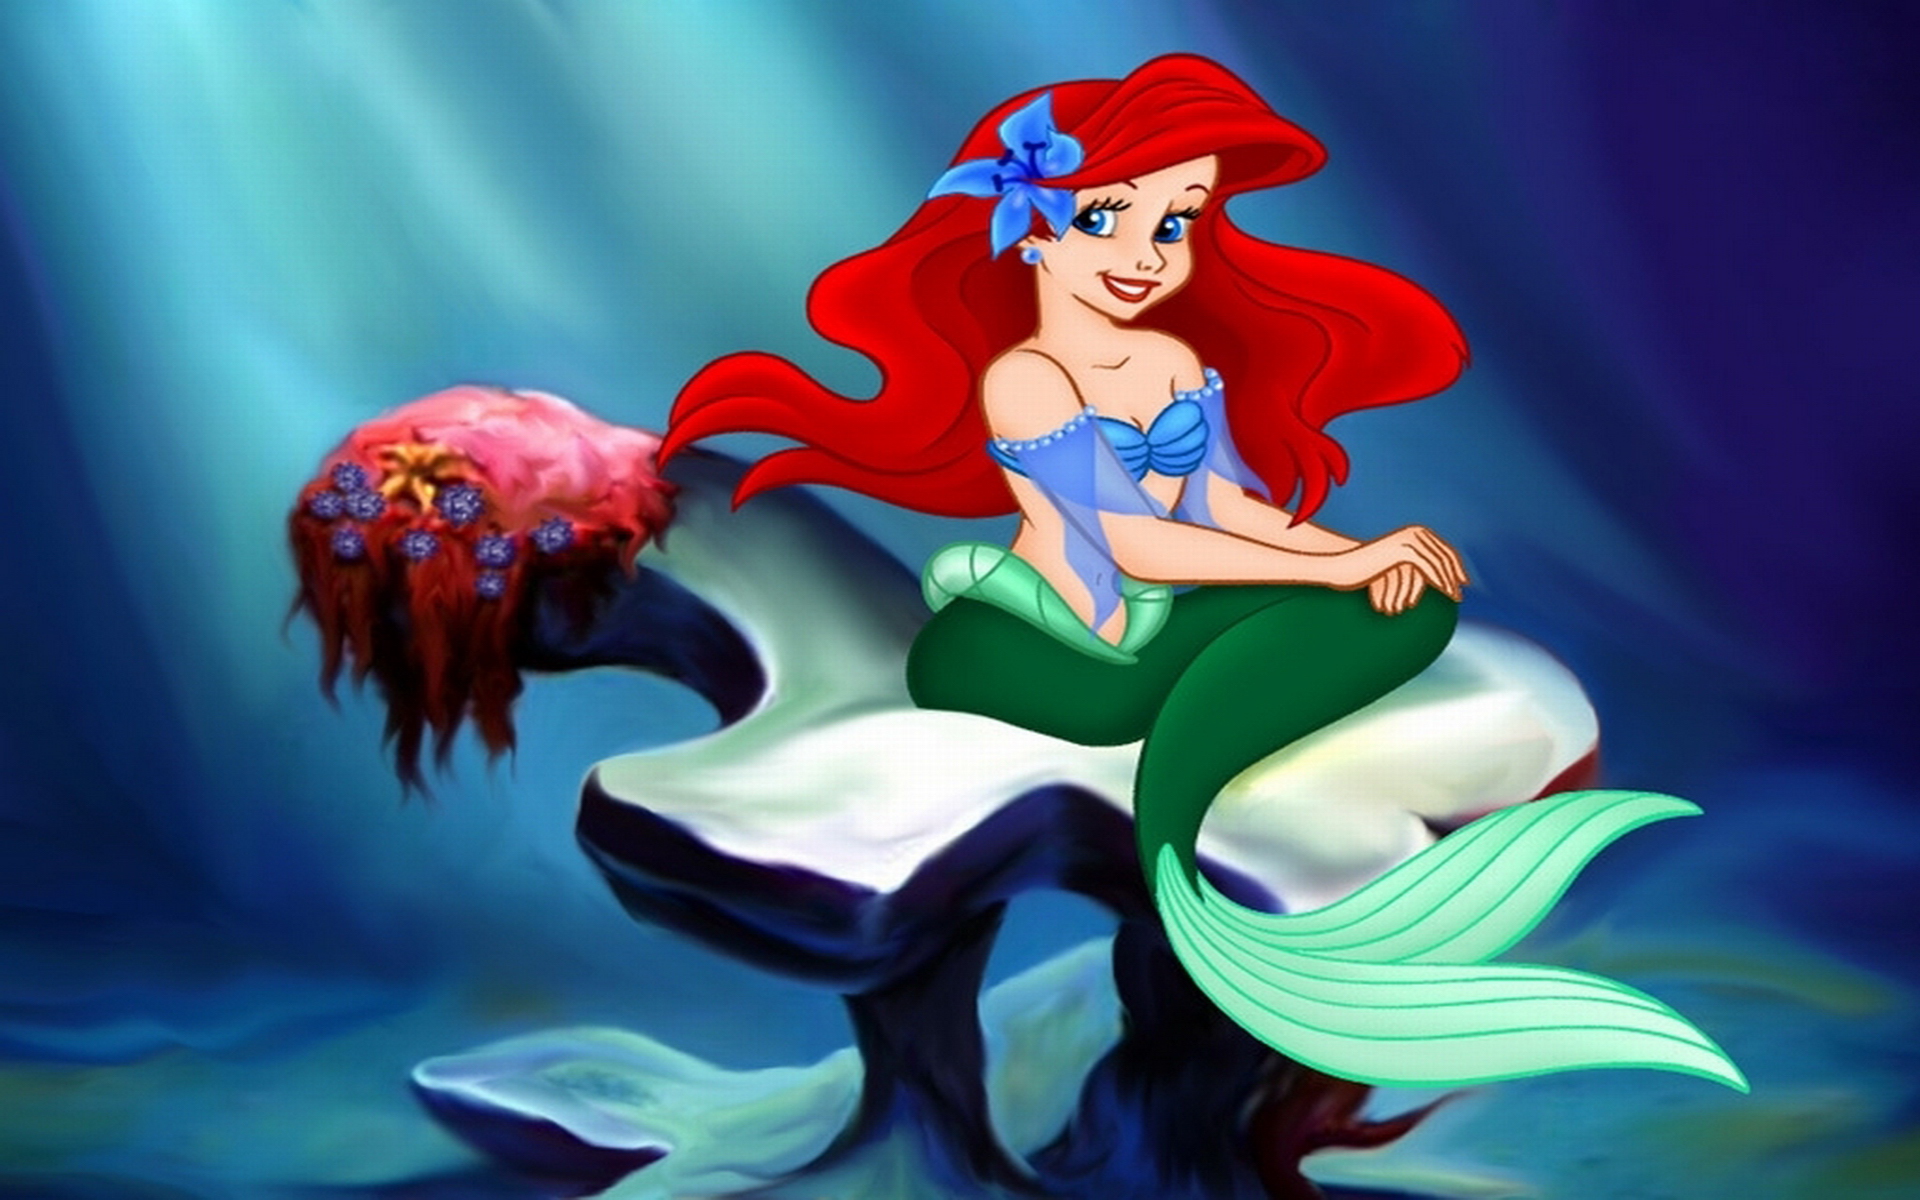 Ariel The Little Mermaid Wallpaper Disney Princess